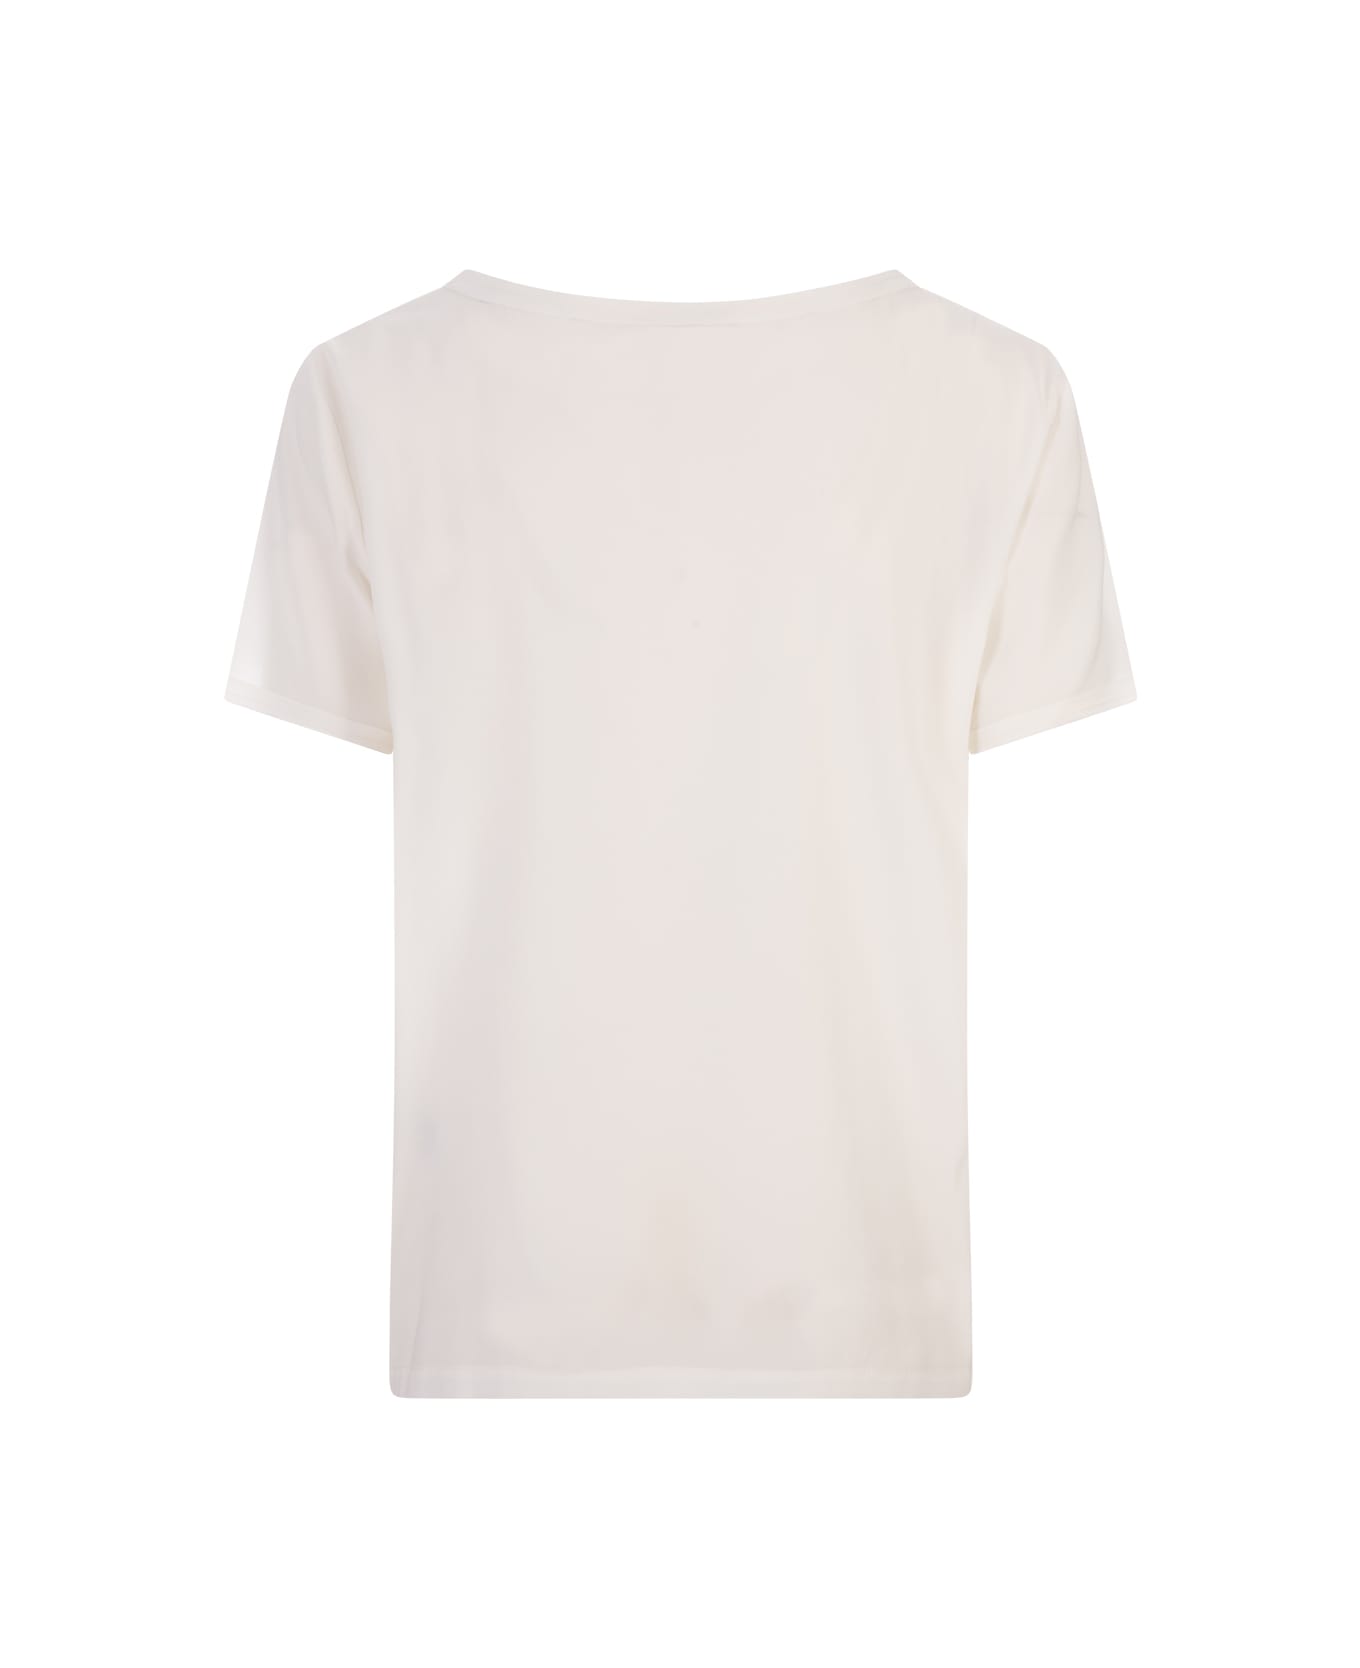 Her Shirt White Opaque Silk T-shirt - White